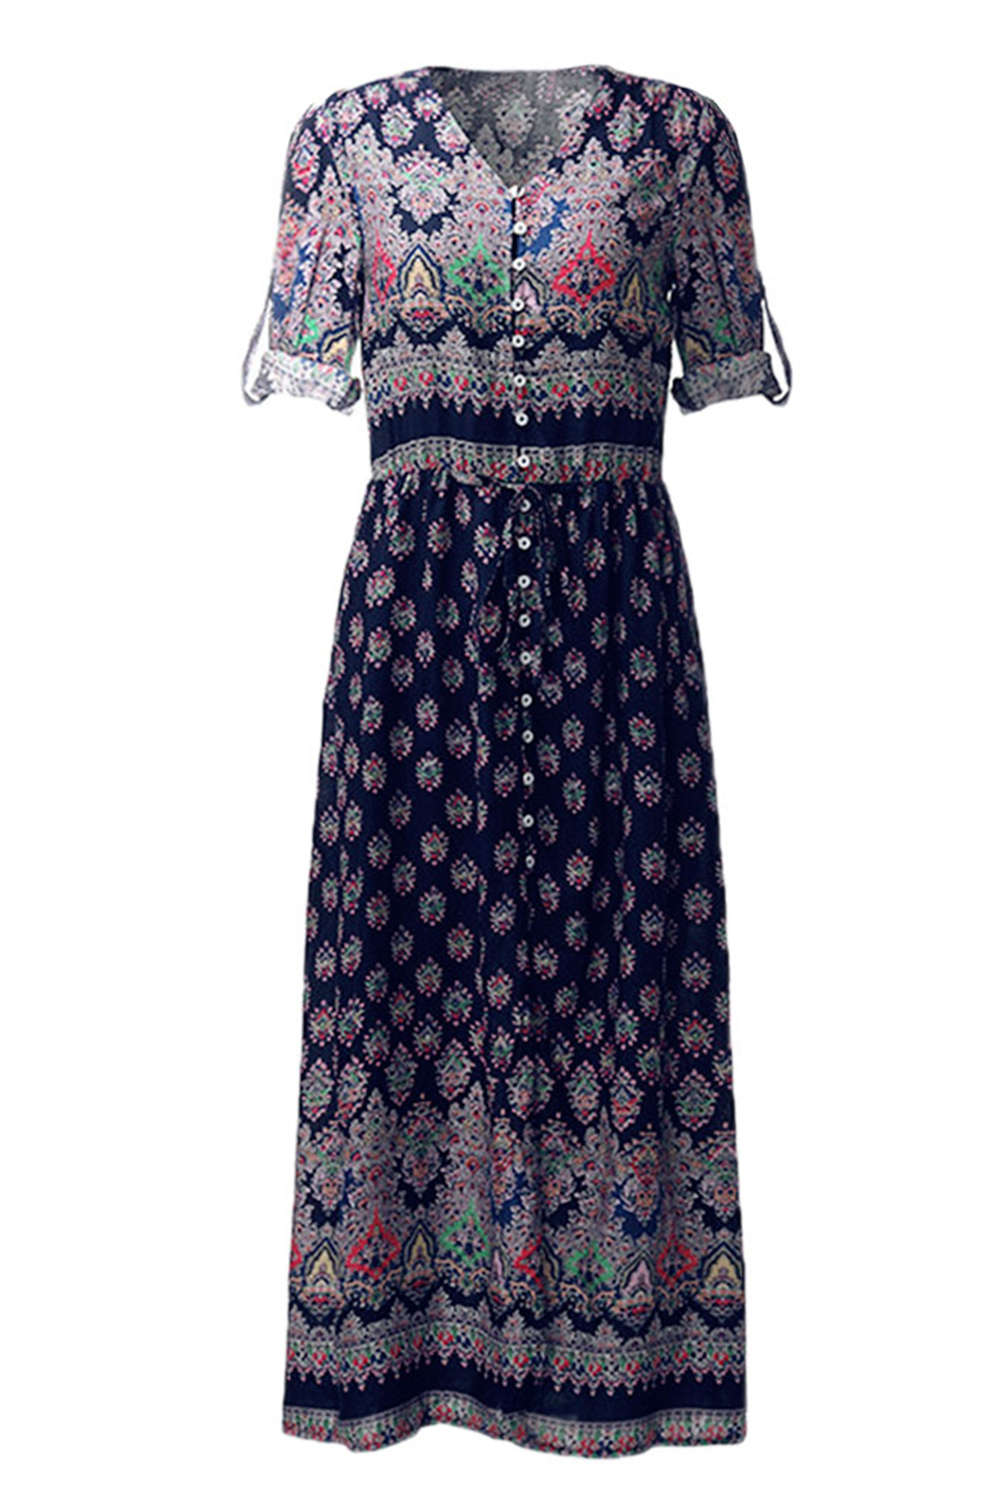 Iyasson Women Long Sleeve Boho Floral Print Maxi Dress